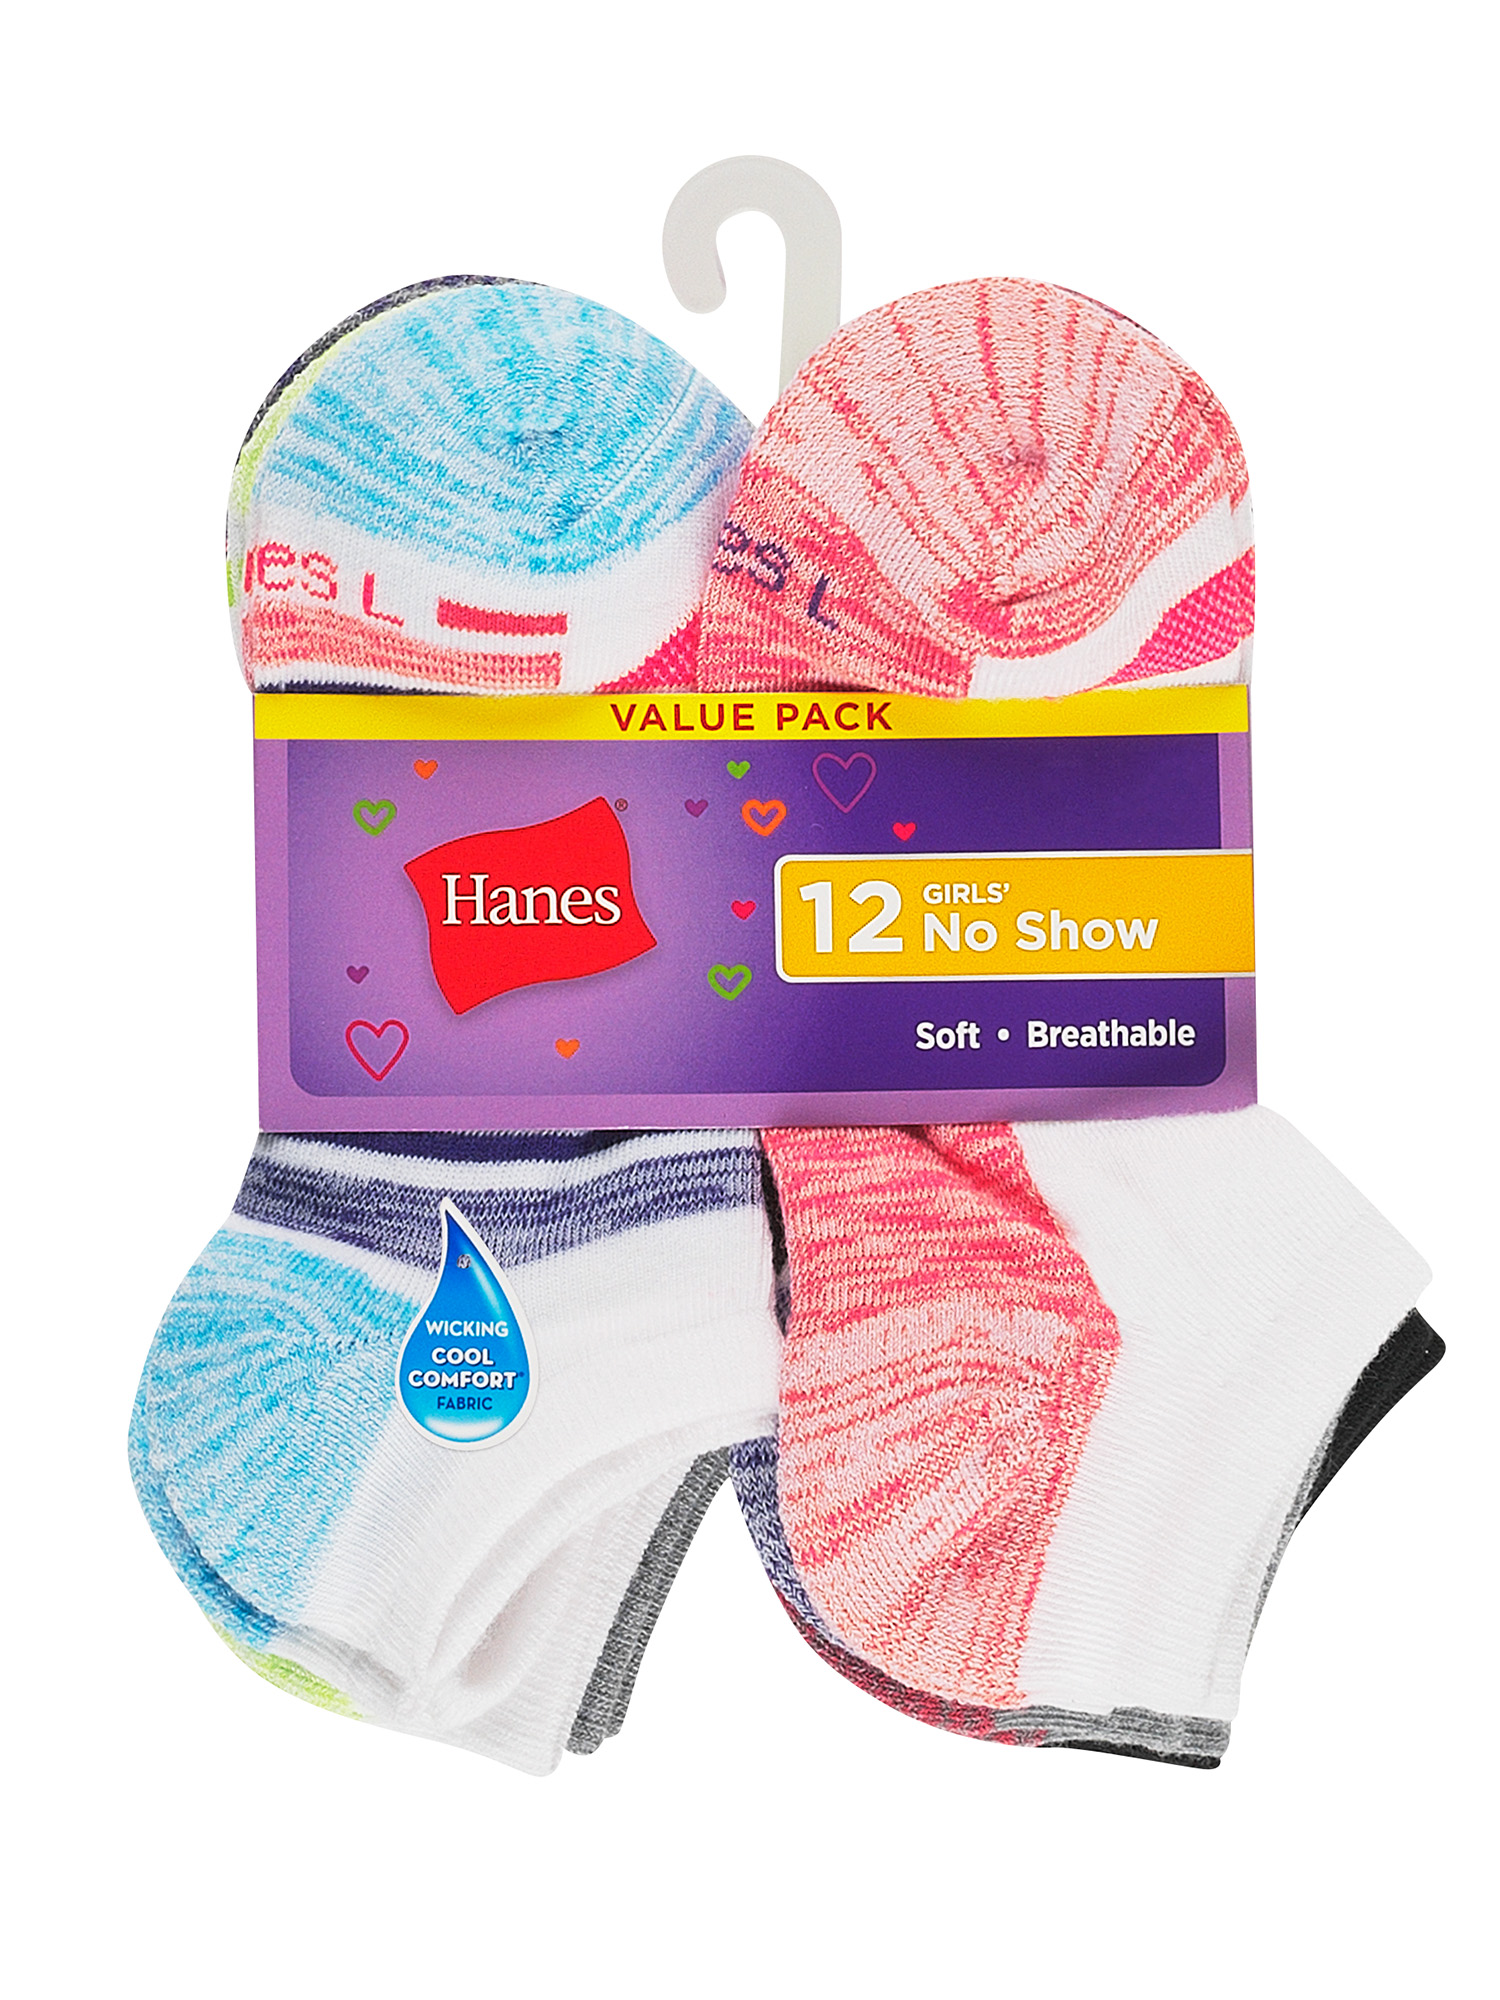 Hanes Girls' Socks, 12 Pack Cool Comfort No Show Socks, Size S-L - image 2 of 5